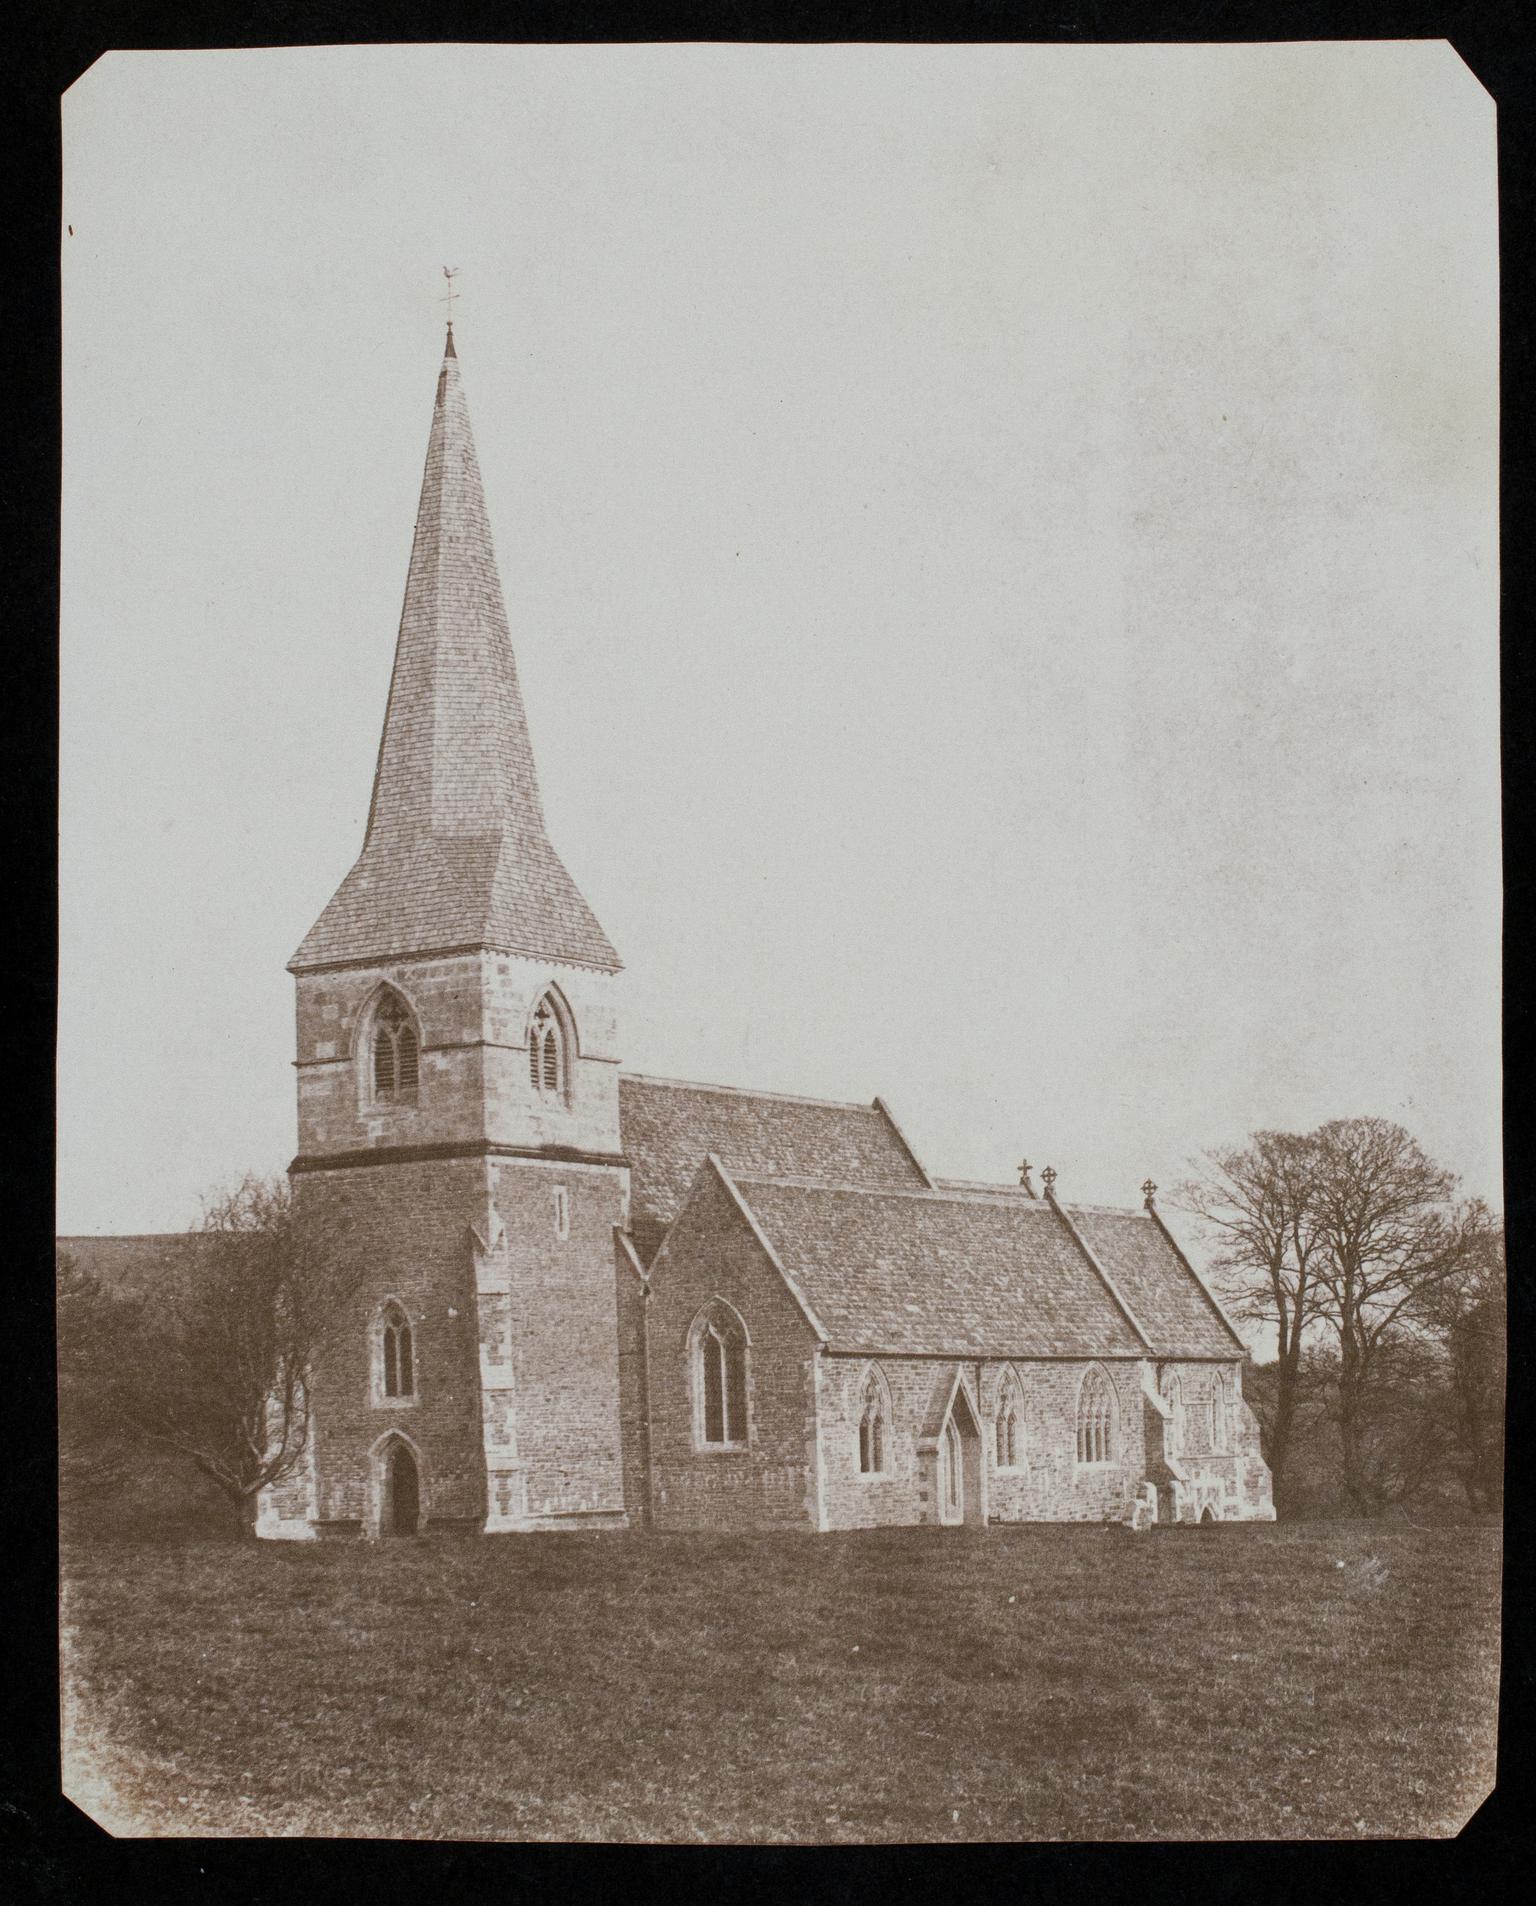 Sketty Church, photograph